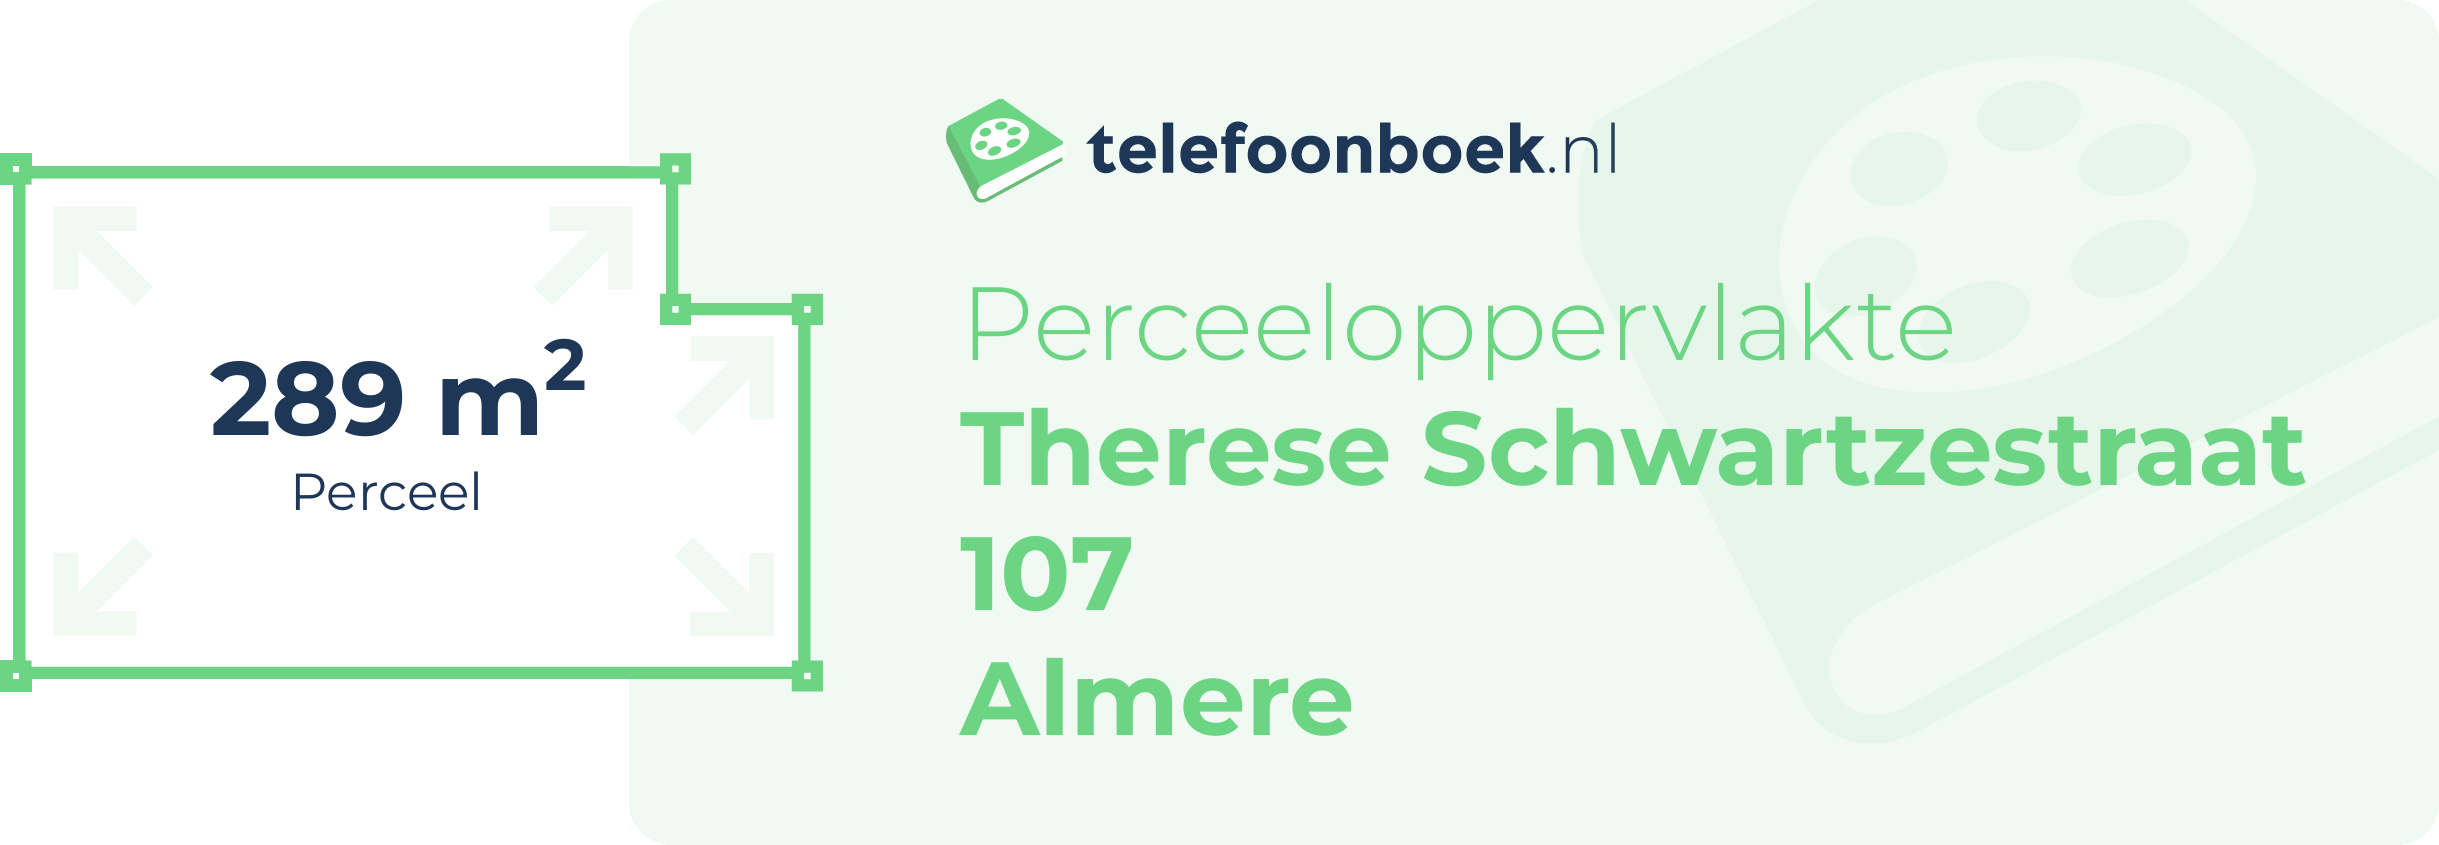 Perceeloppervlakte Therese Schwartzestraat 107 Almere